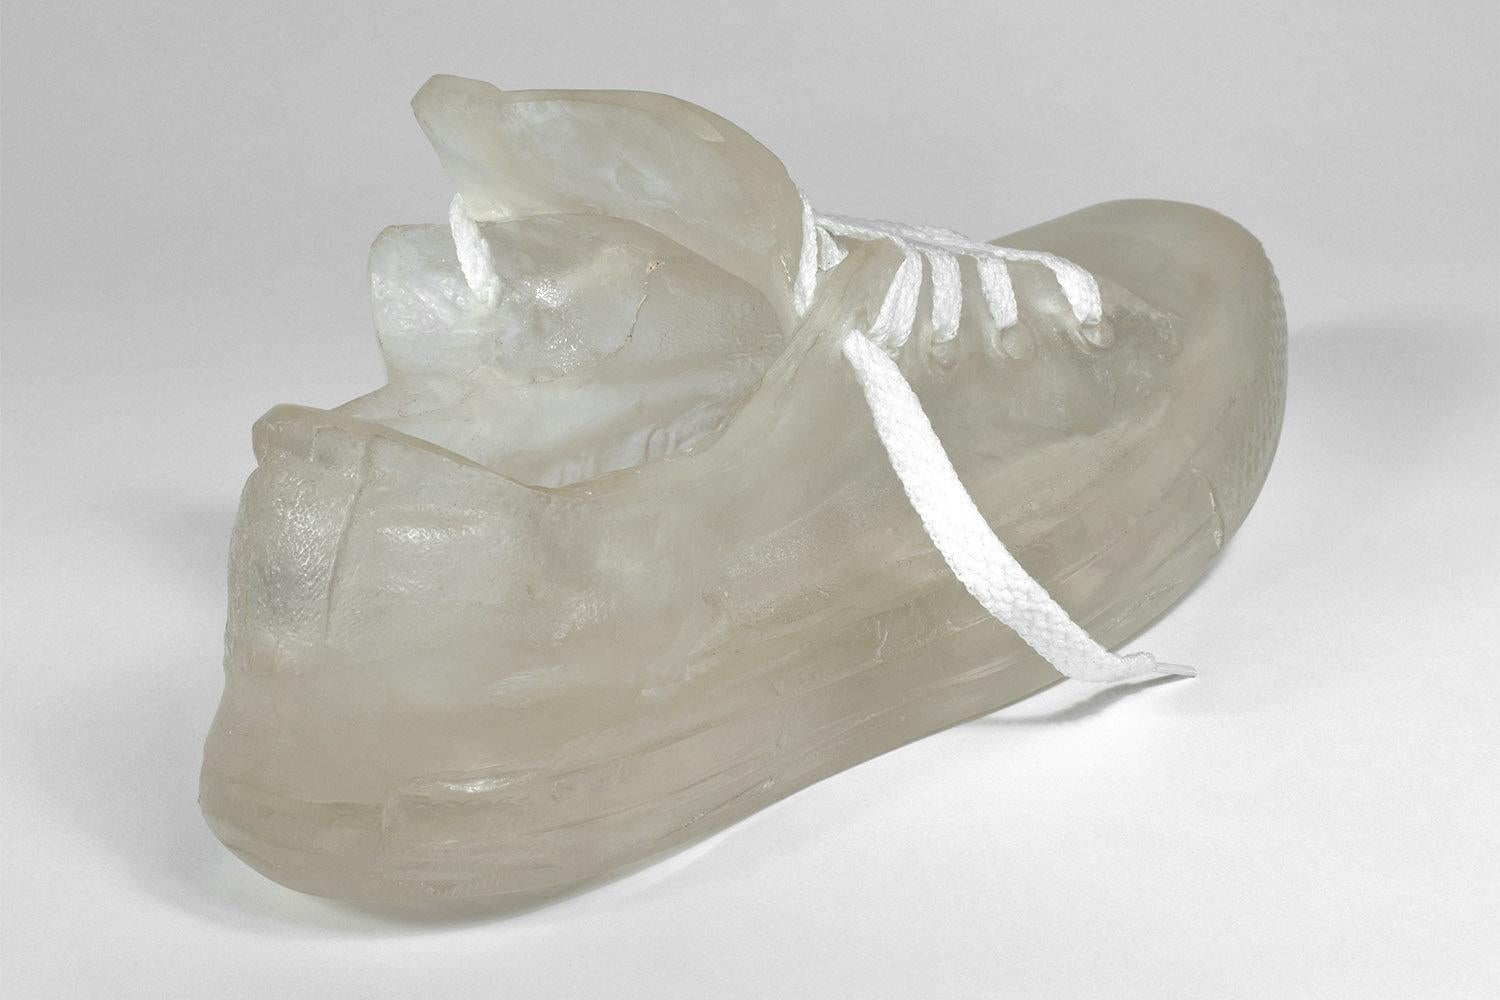 Other Acrylic Tennis Shoe for Serving Croquettes Designed by José Andrés & Sami Hayek